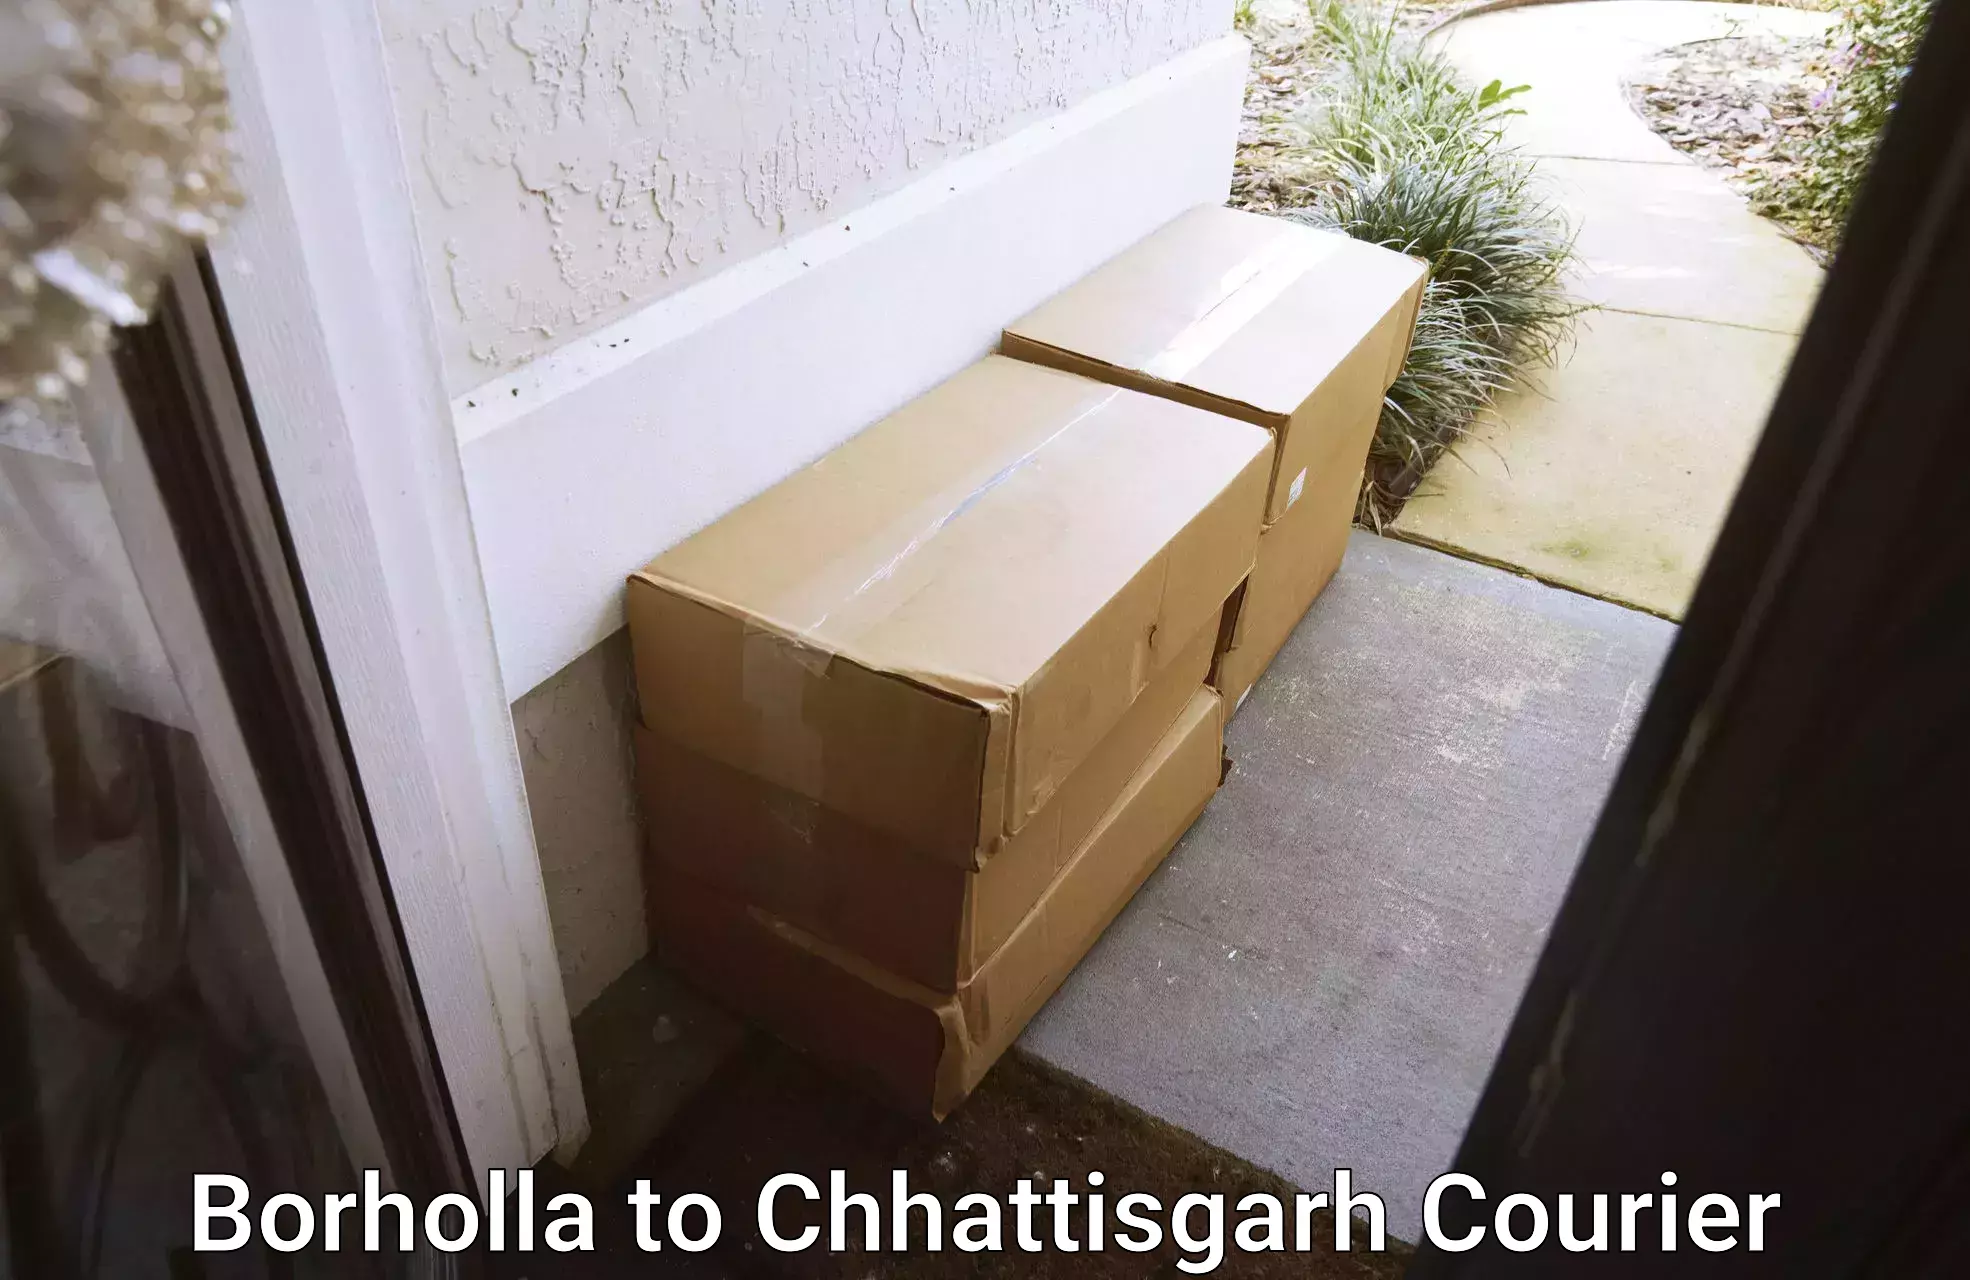 Express mail service in Borholla to Chhattisgarh